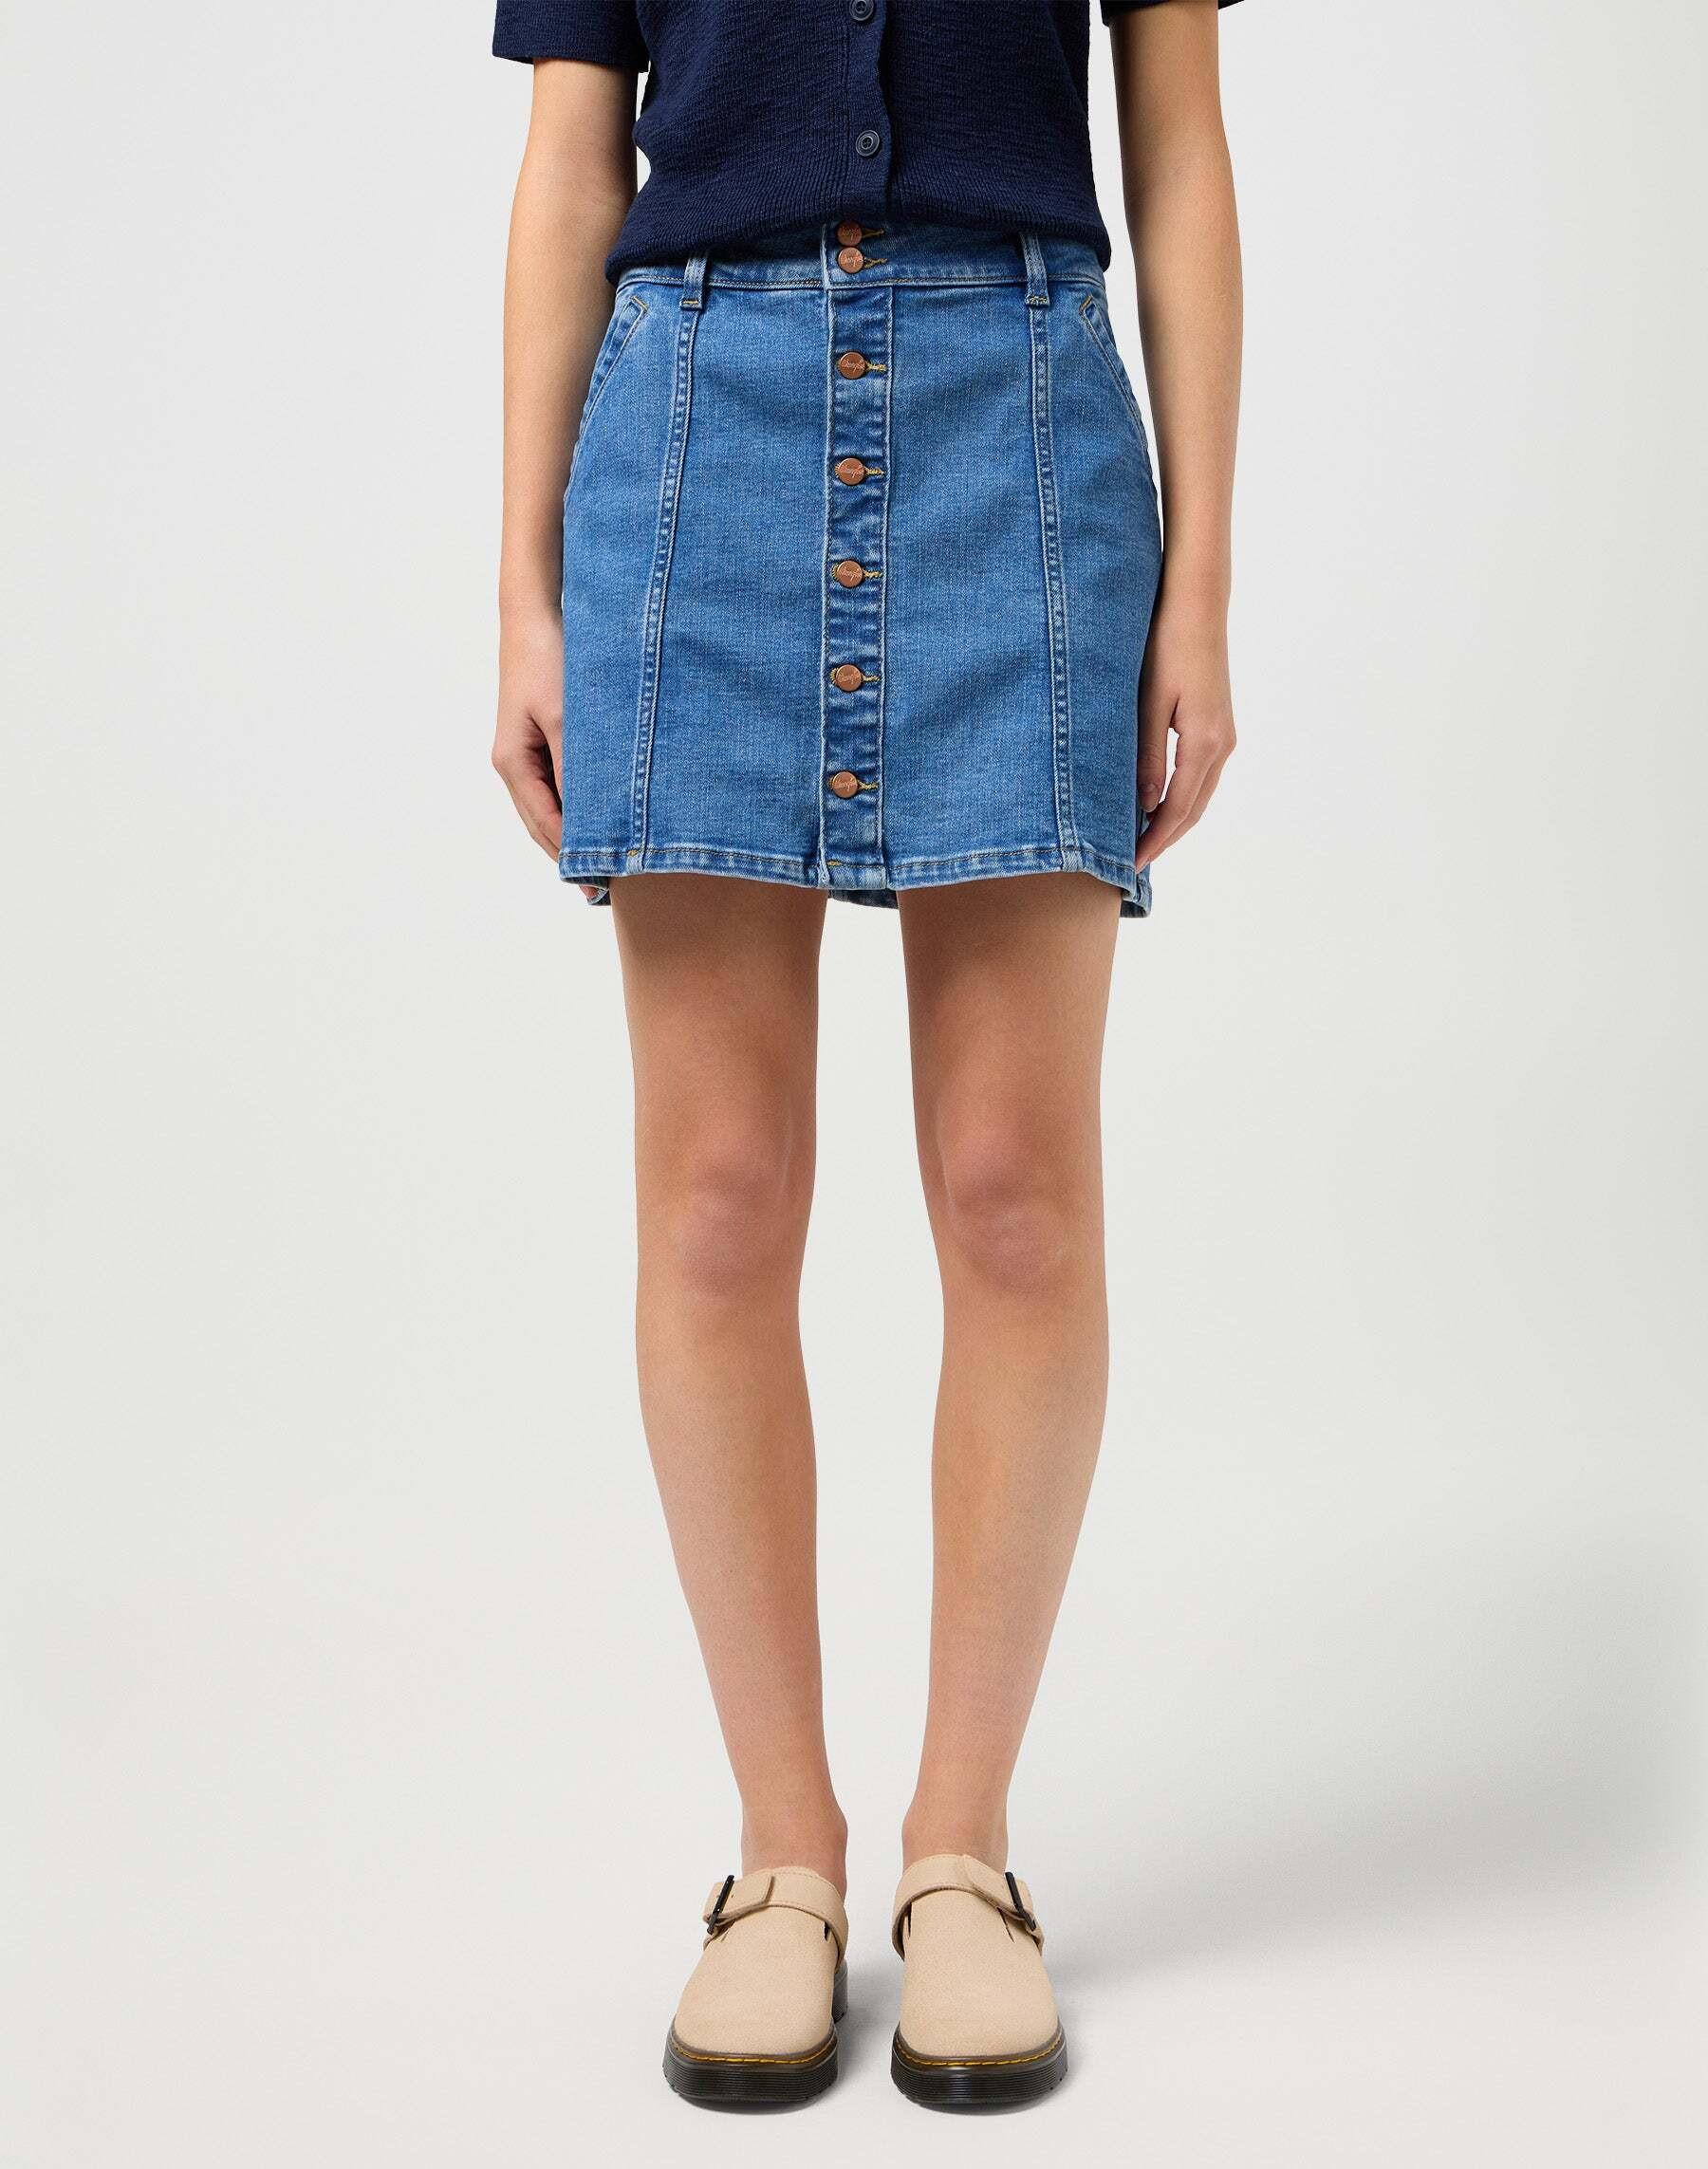 Röcke Denim Mini Skirt Damen Blau M von Wrangler